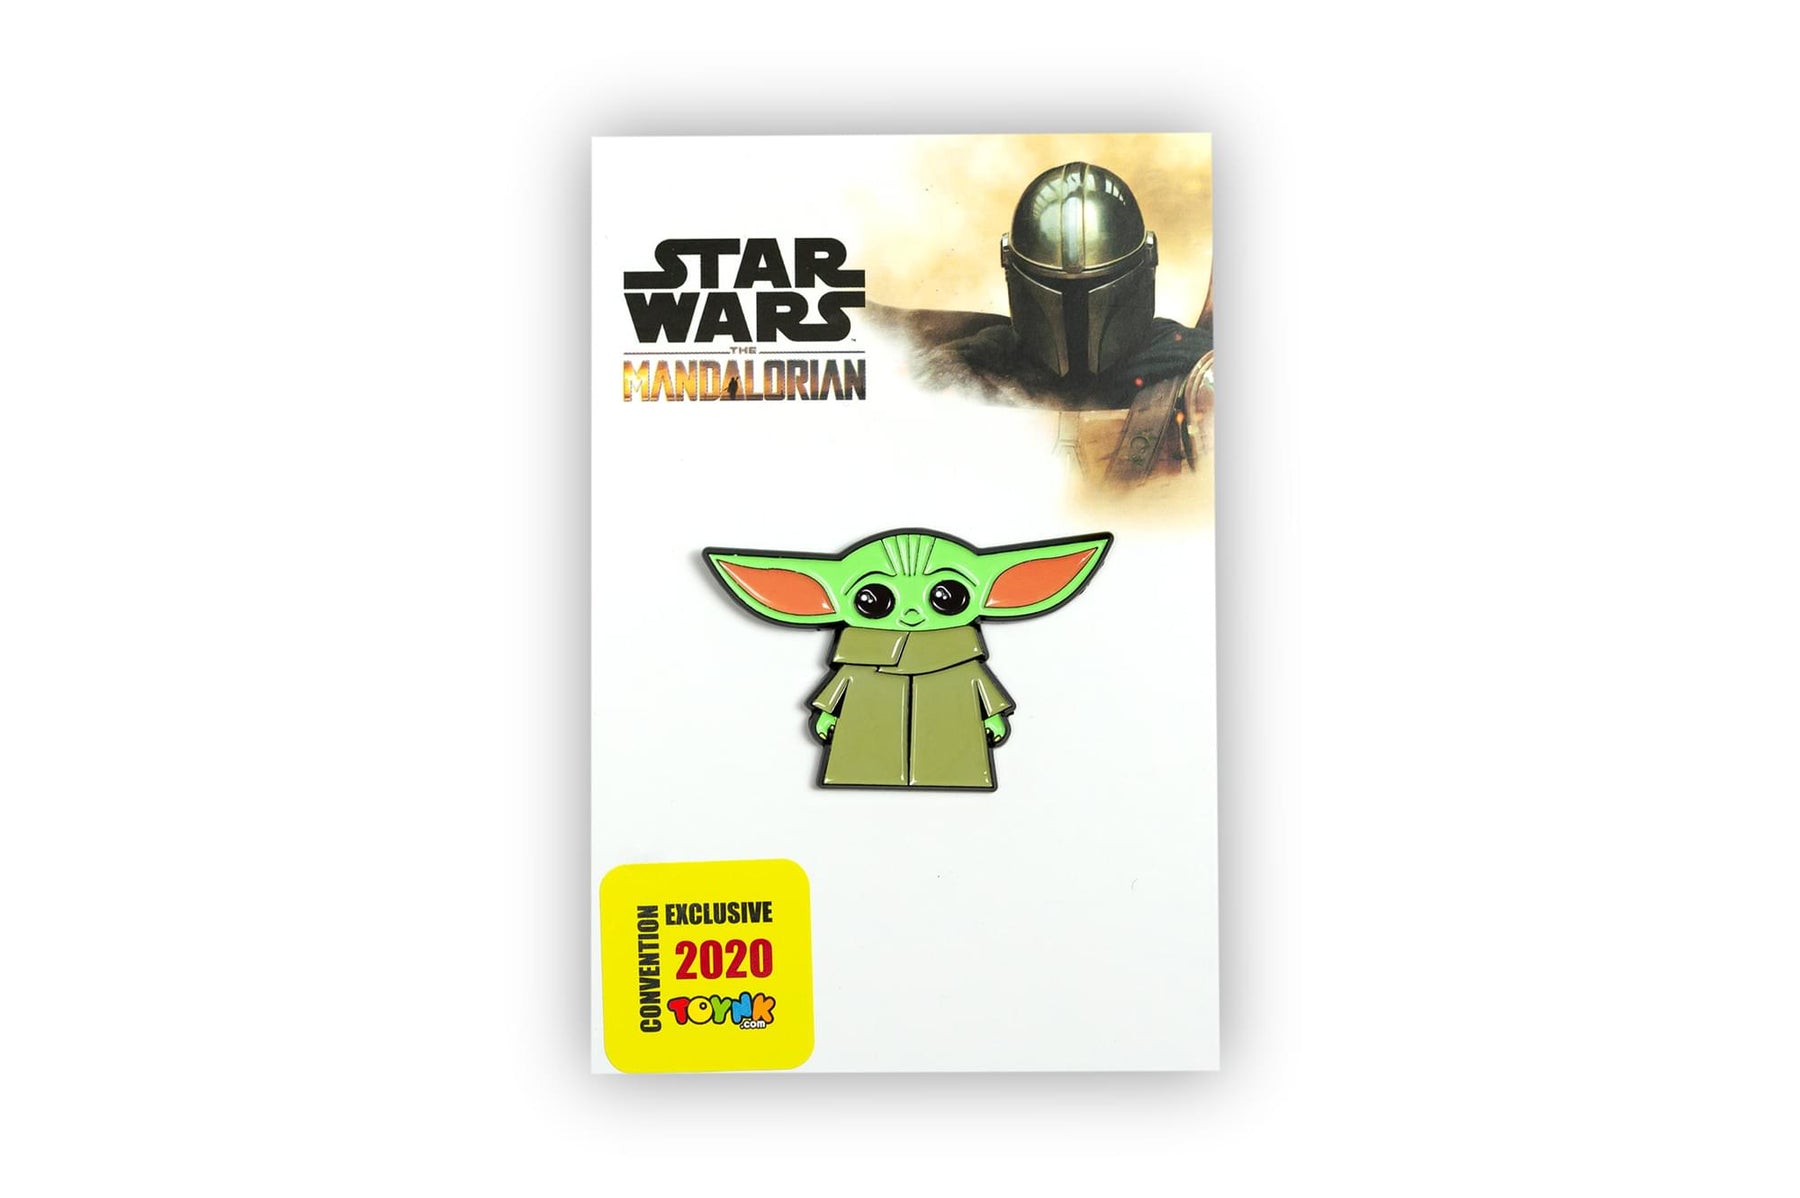 Star Wars Toynk Exclusive Enamel Pin Mandalorian Cartoon Child Baby Yoda Ears Up